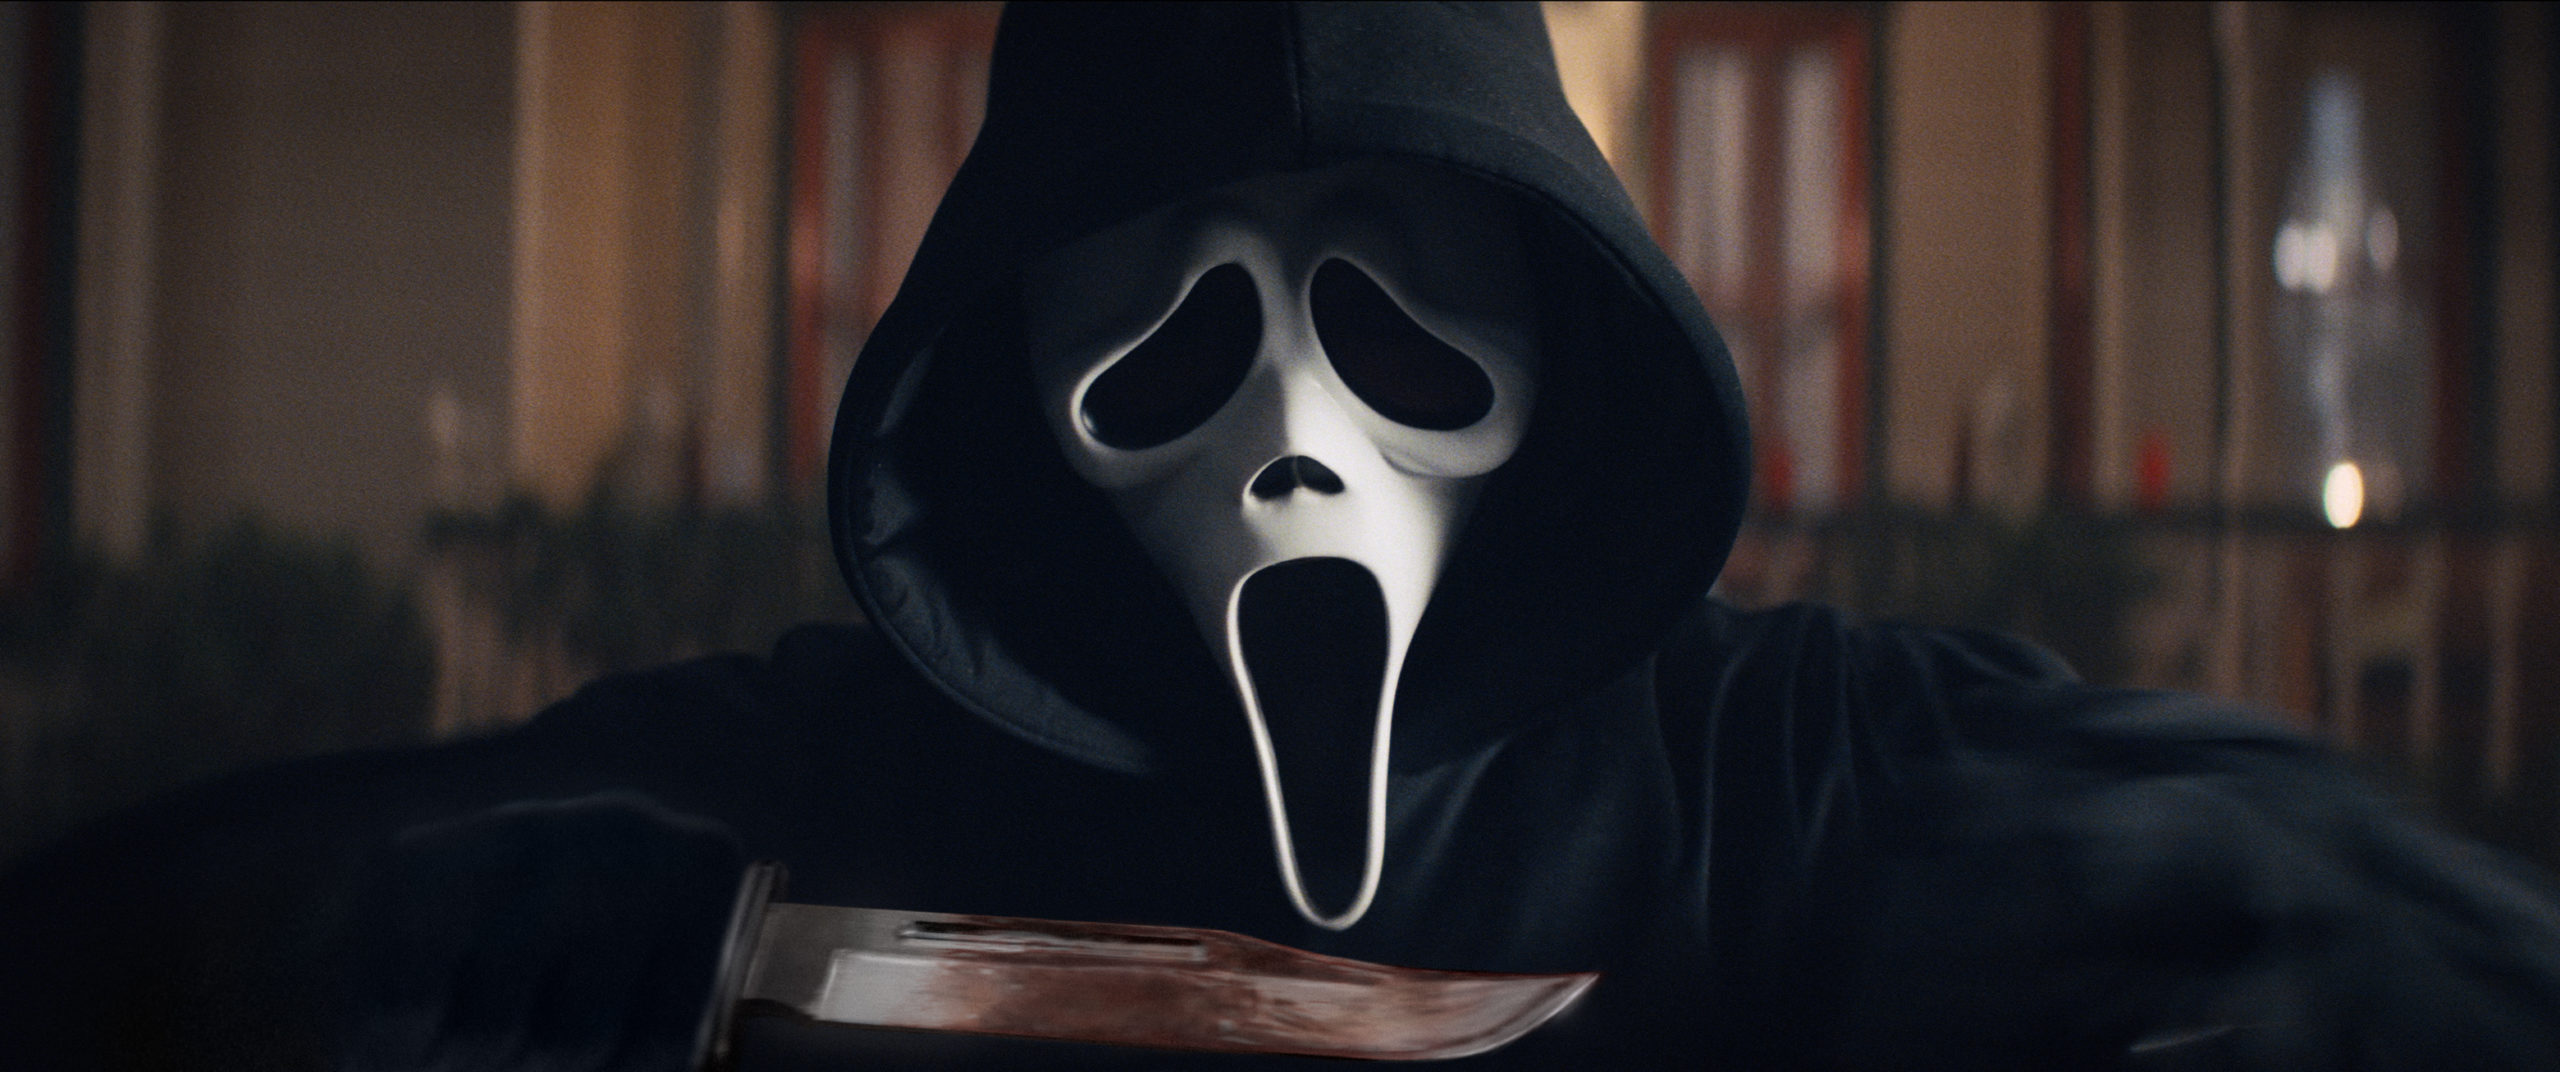 Scream Final Trailer | Will The New Generation Survive?